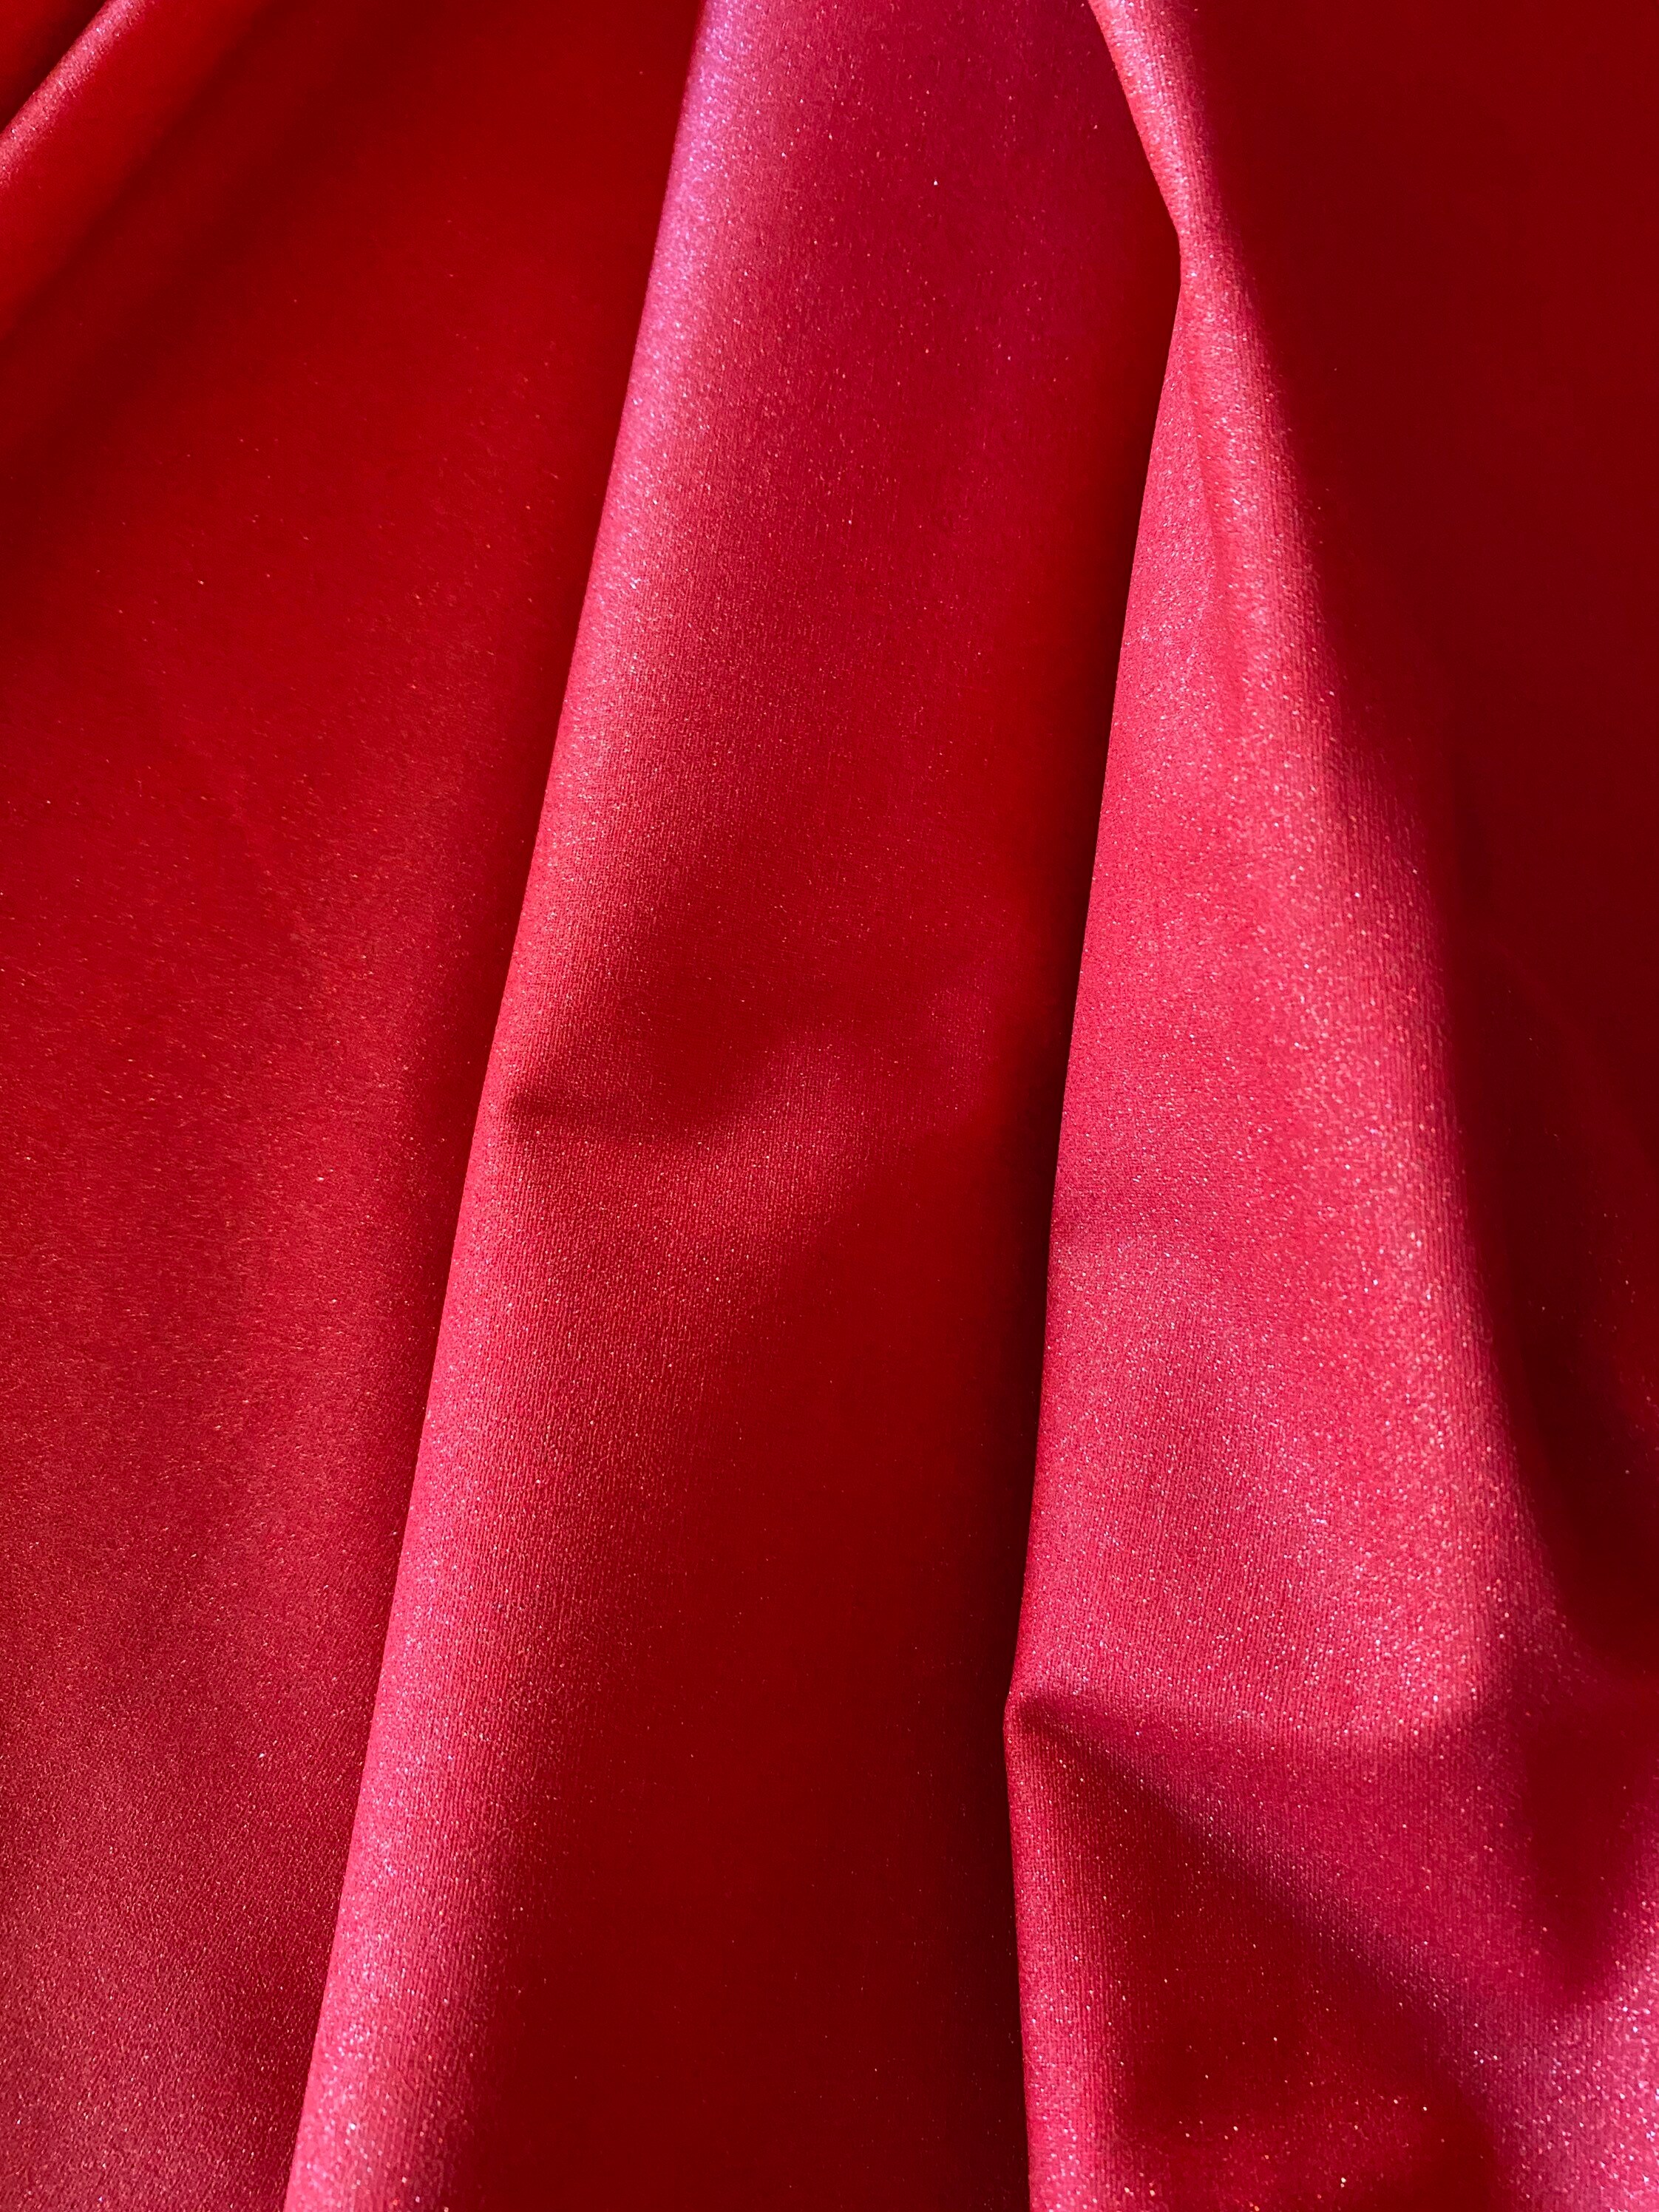 Glitter Cotton Fabric In Bright Red 100 Cotton44115 Cm Etsy